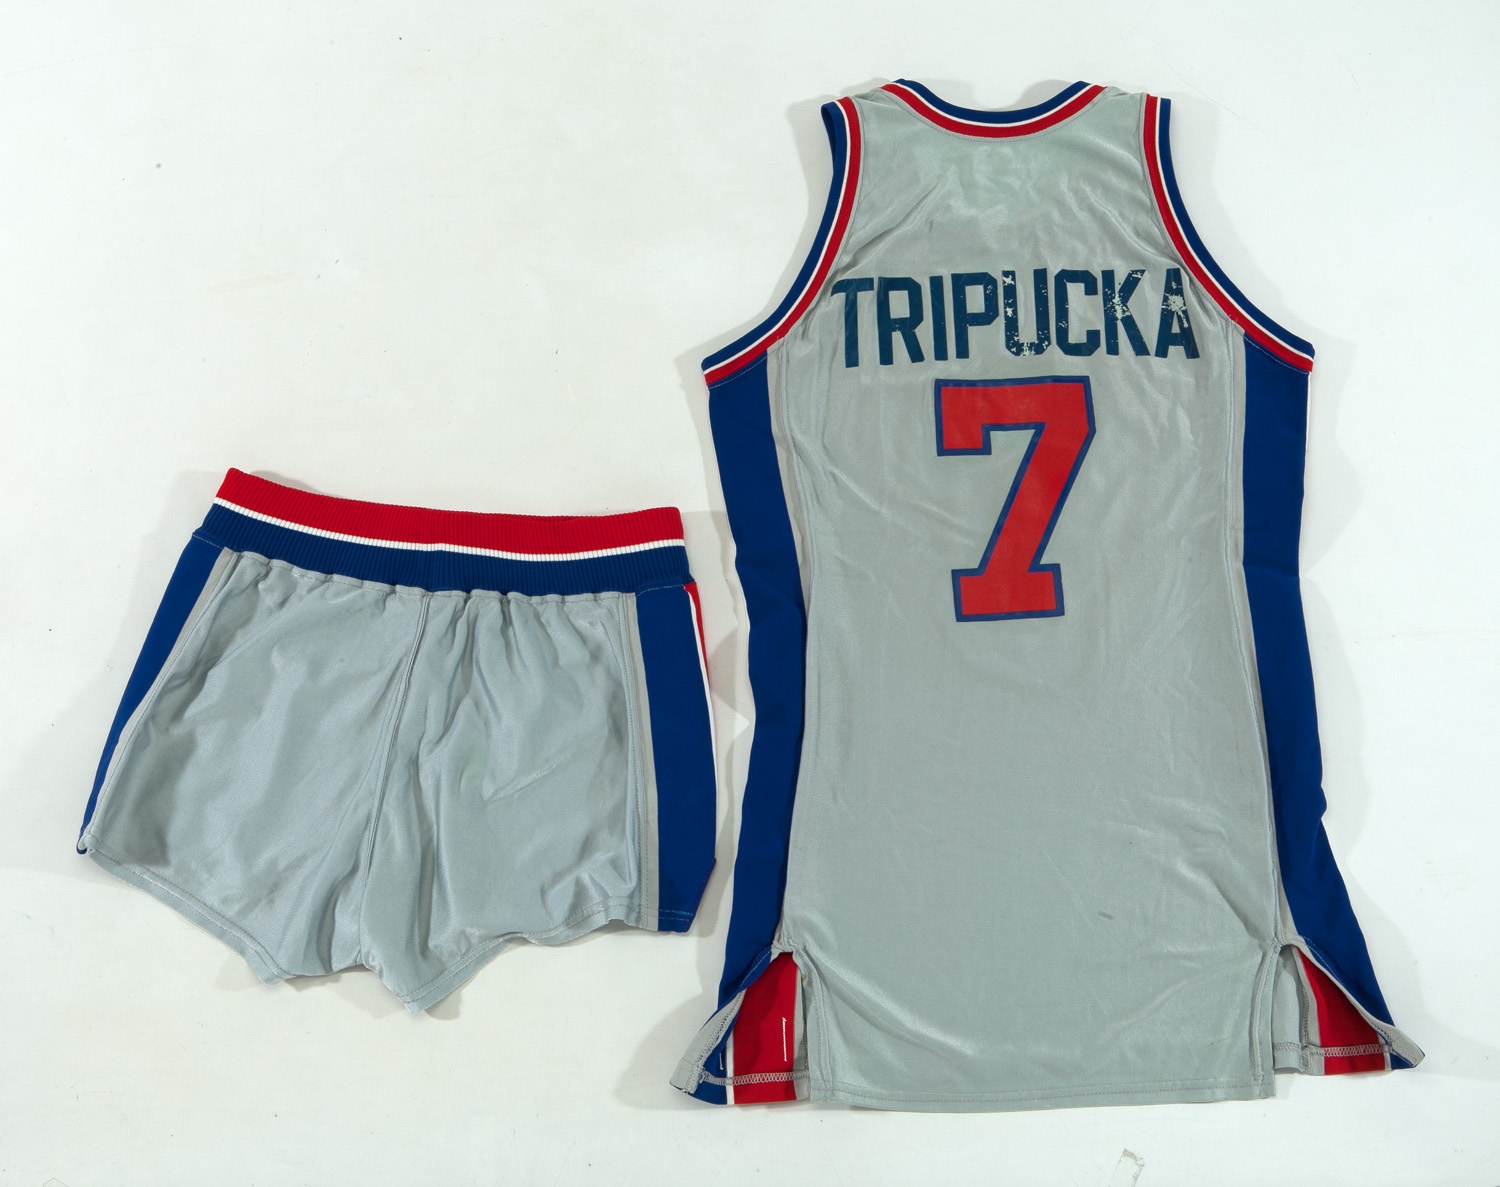 Detroit Pistons 1981-1983 Home Jersey